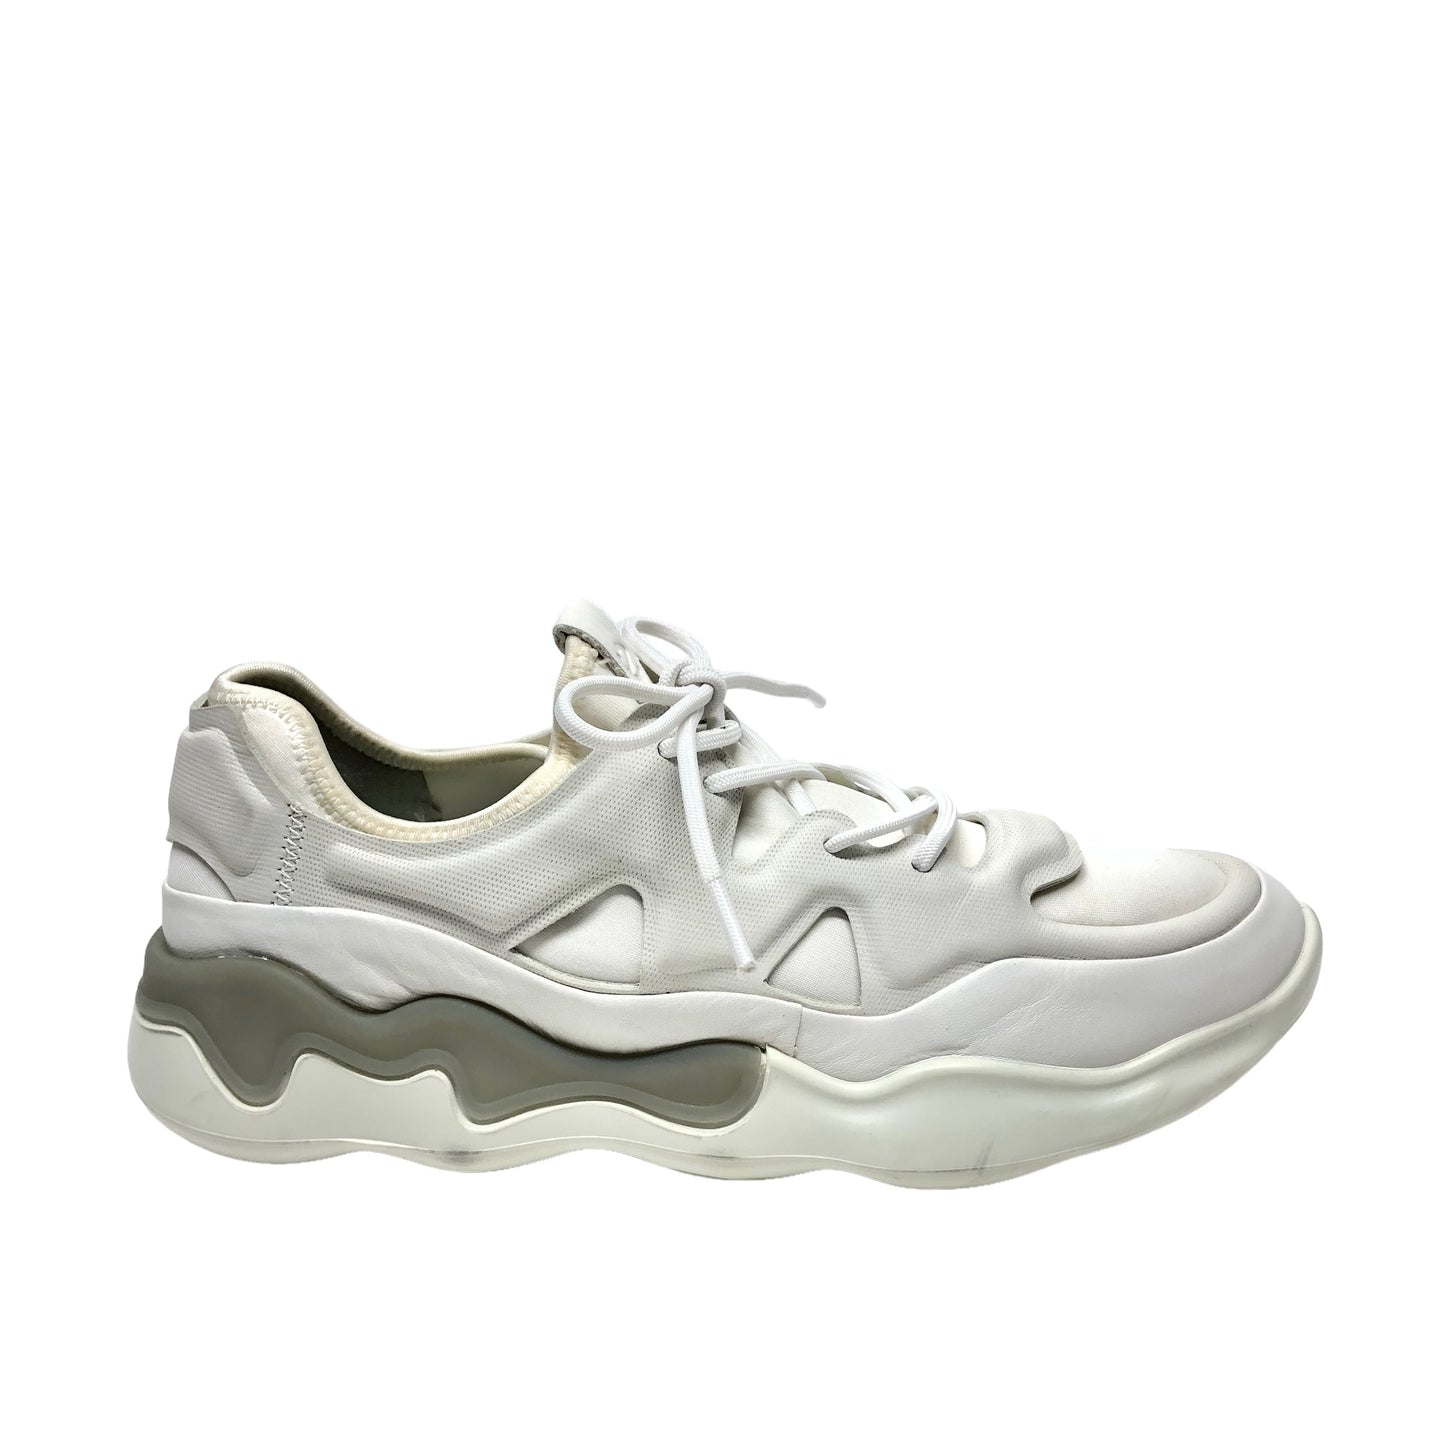 Cream Shoes Athletic Ecco, Size 10